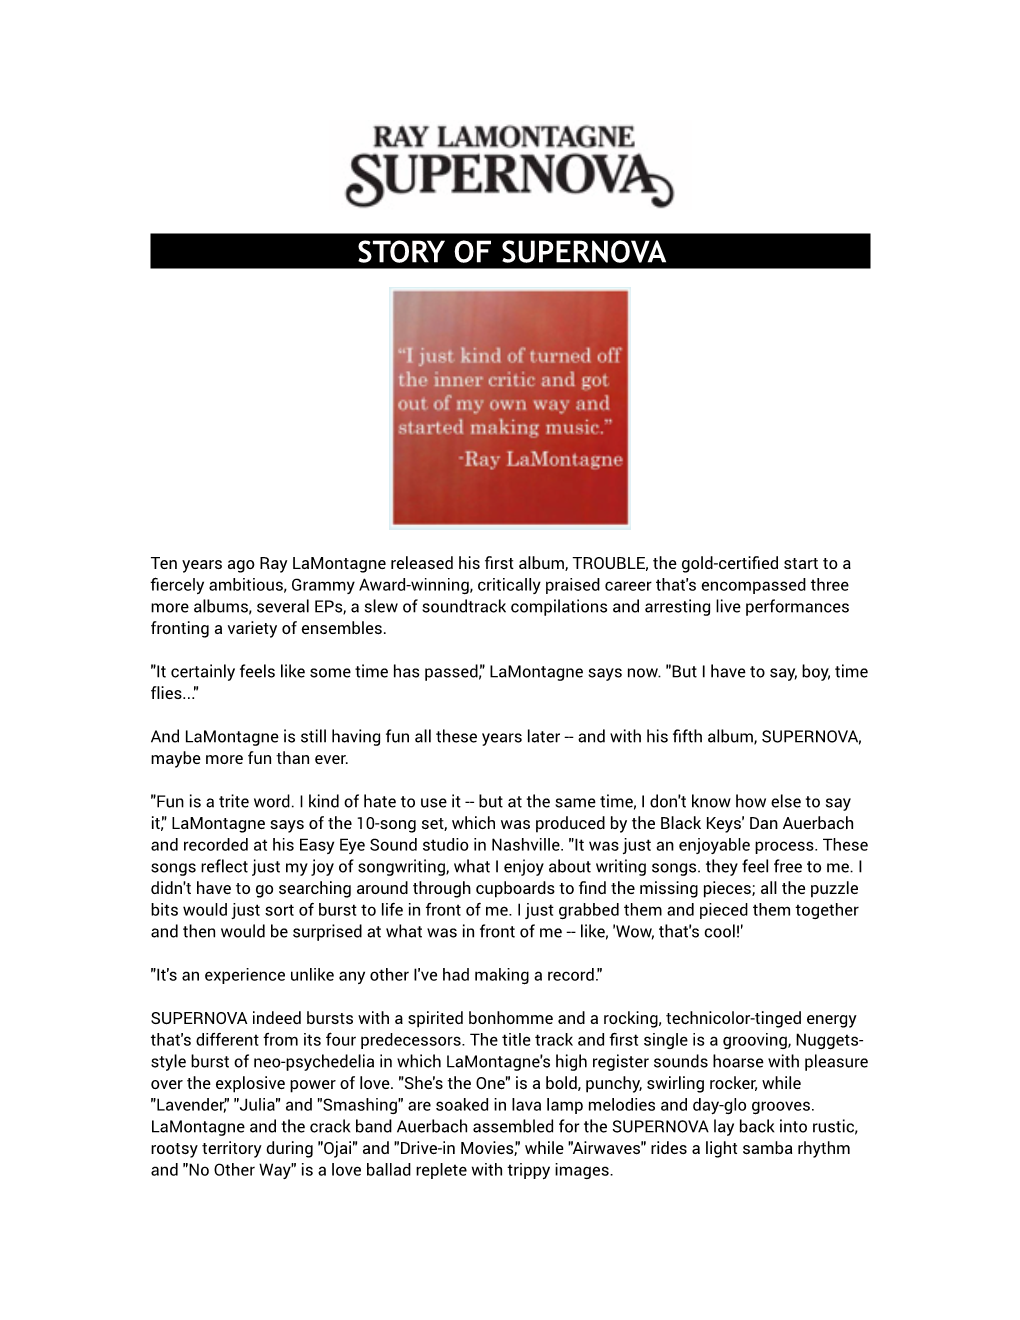 Story of Supernova